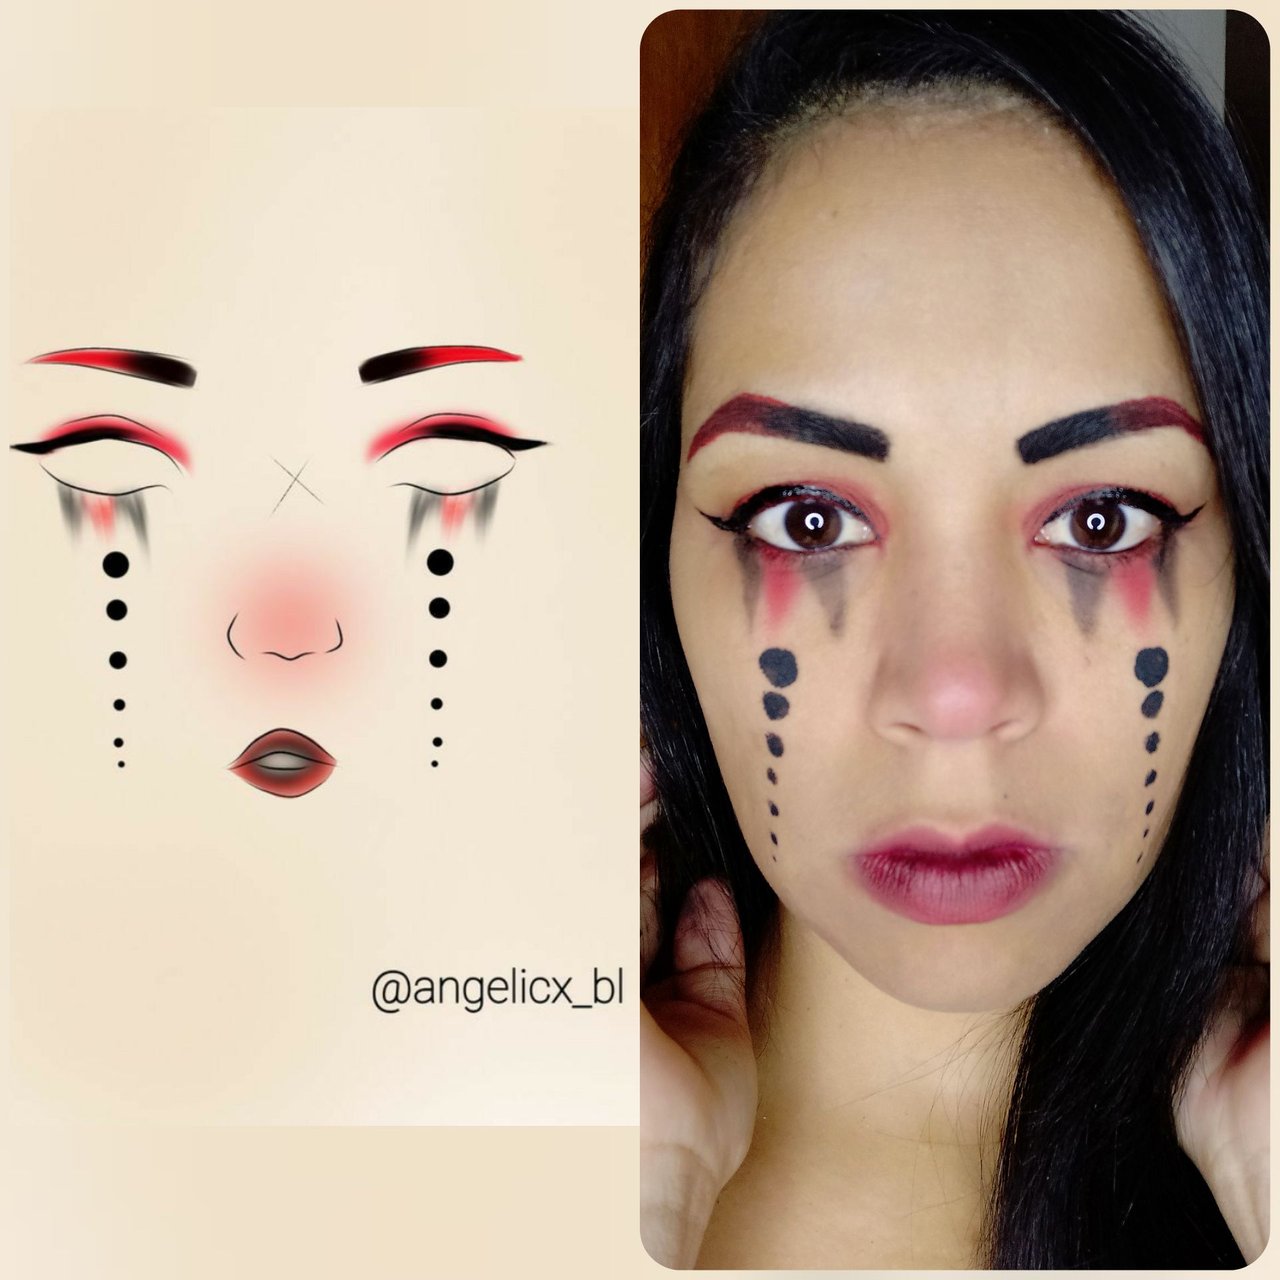 ESP/ENG] Iniciativa: Recrea un boceto de || Initiative: Recreate a Pinterest makeup sketch | PeakD